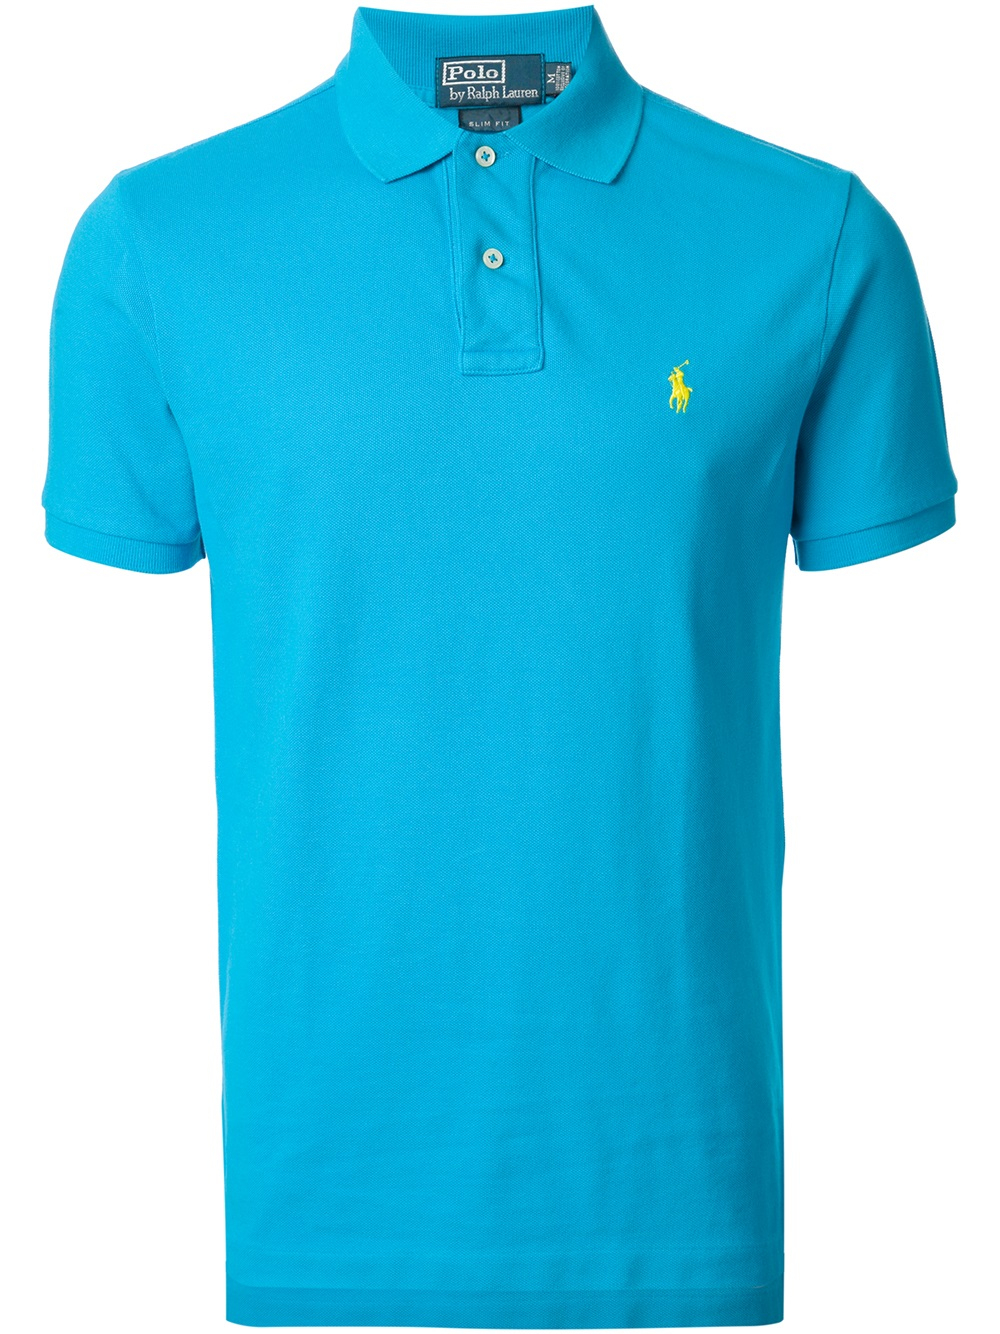 Lyst - Polo Ralph Lauren Polo Shirt in Blue for Men